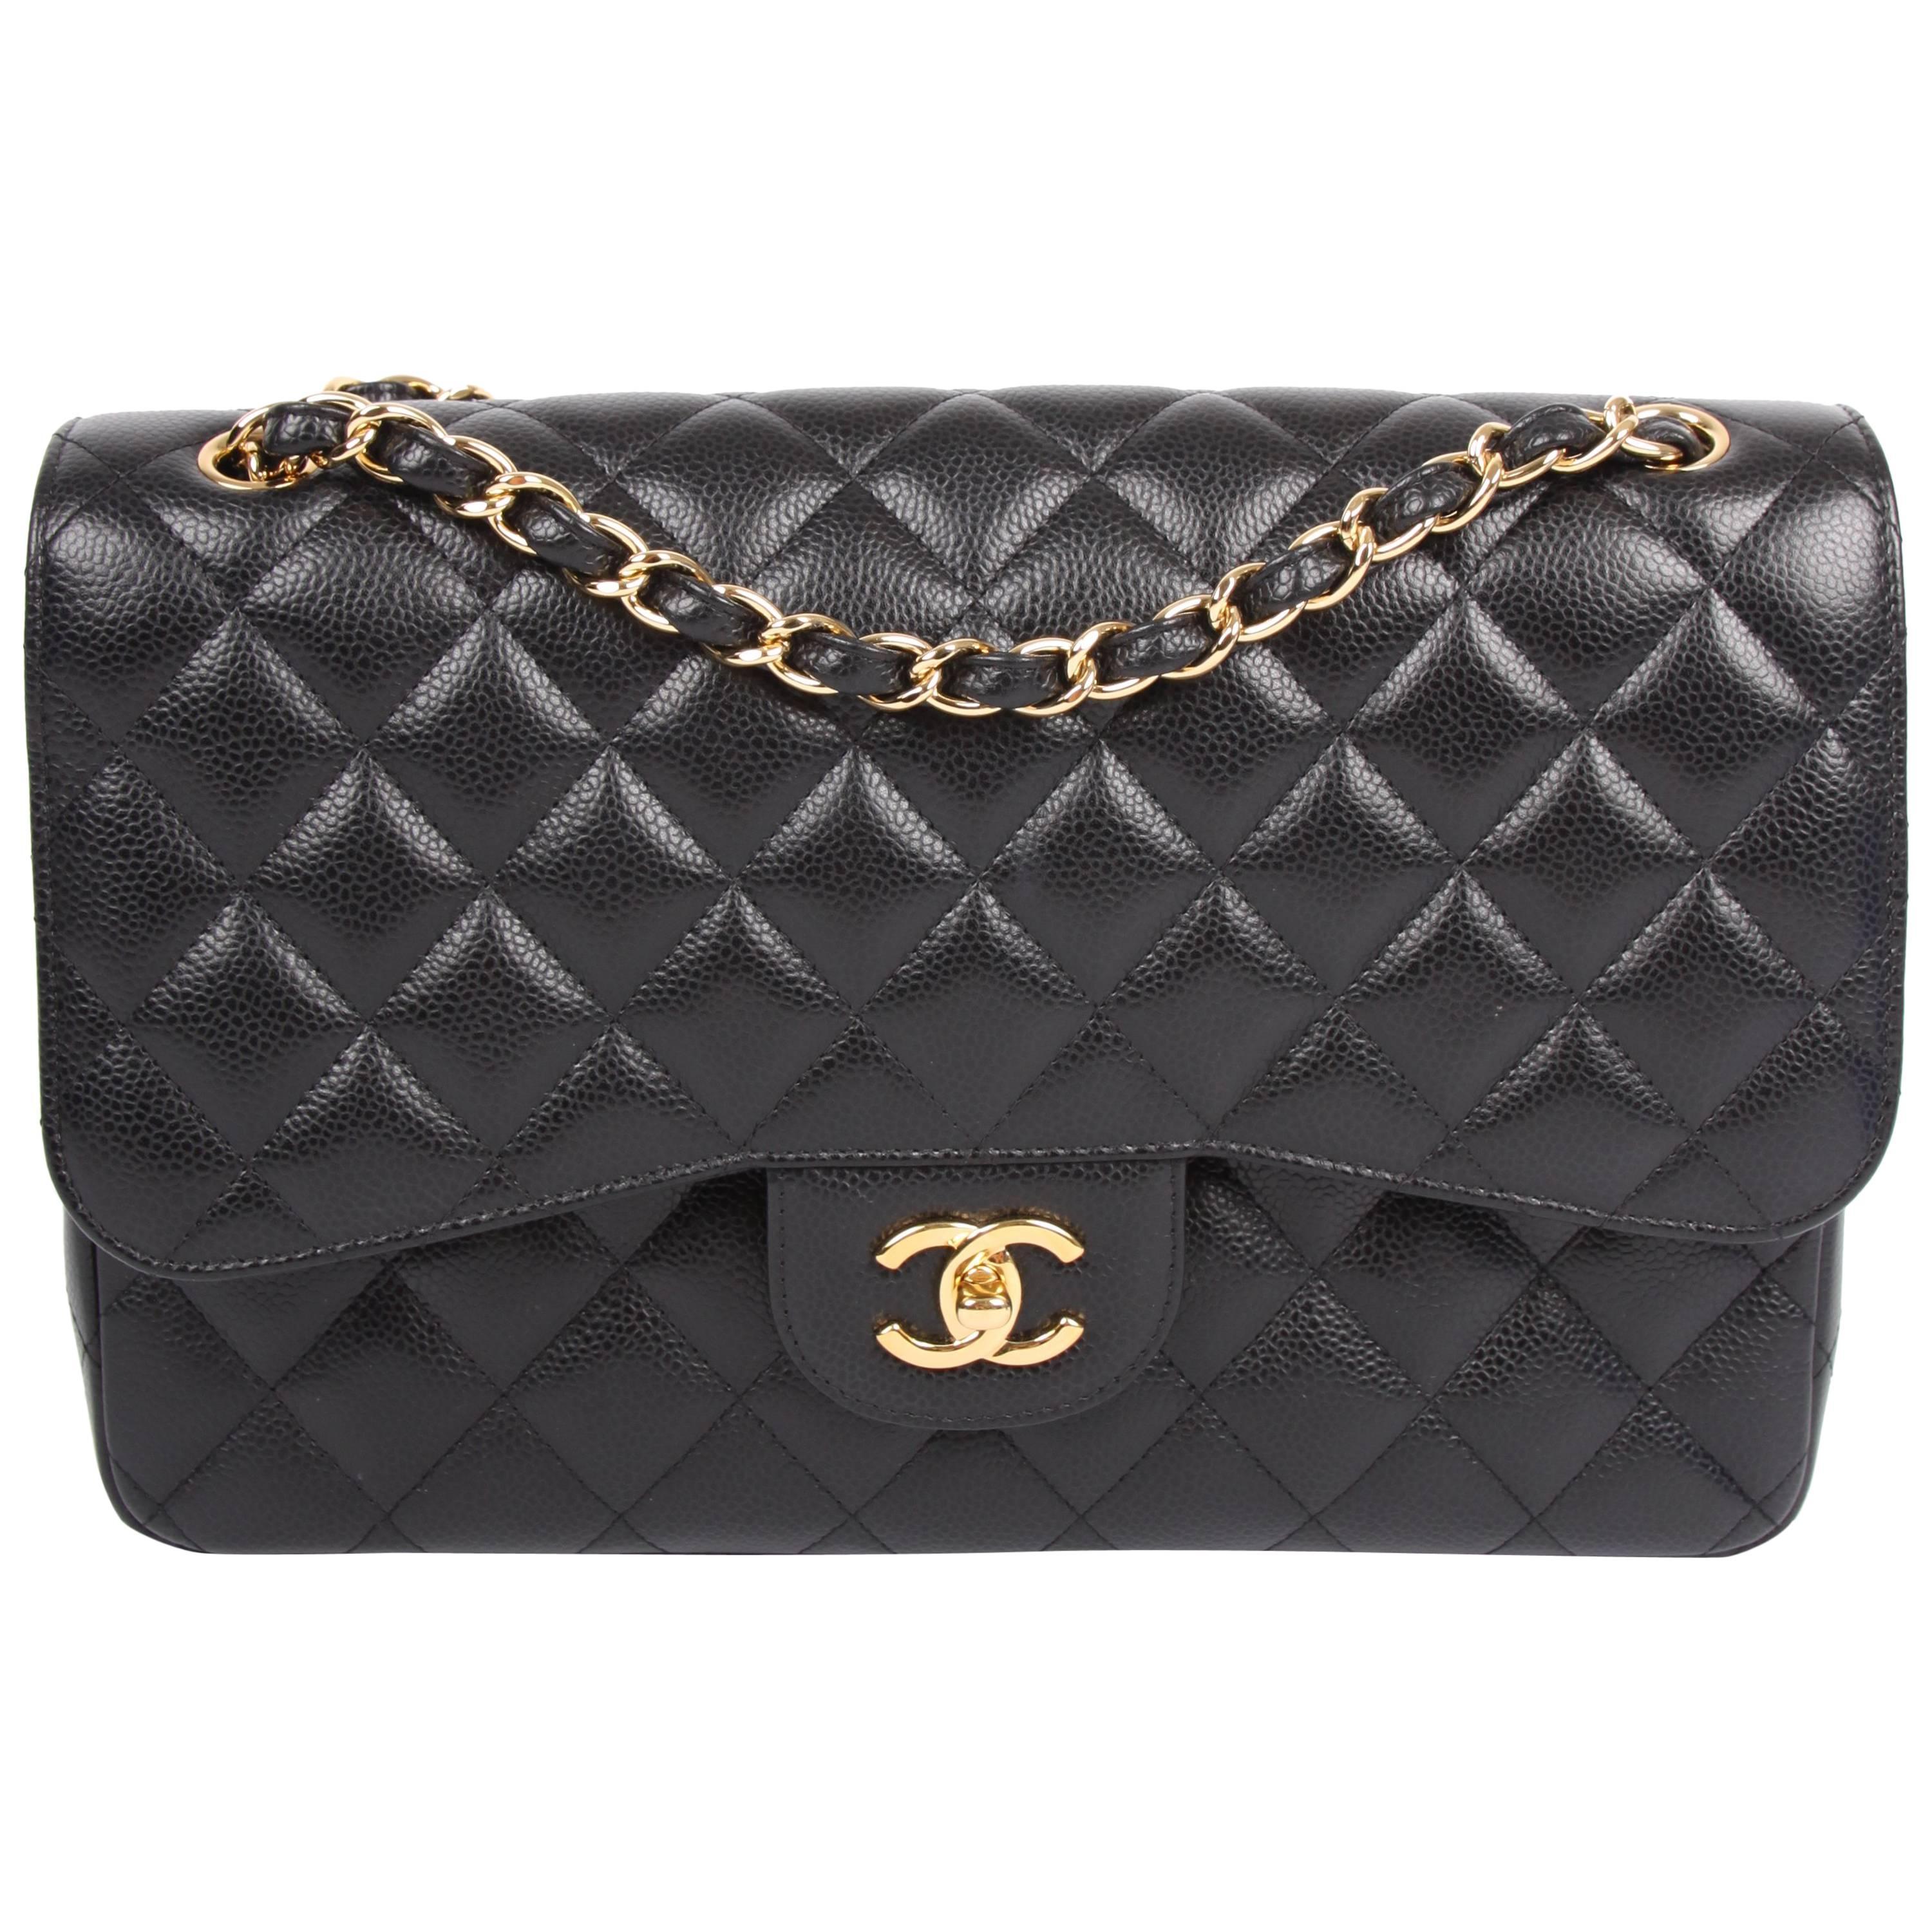       Chanel 2.55 Timeless Jumbo Double Flap Bag - black caviar leather/gold Cha